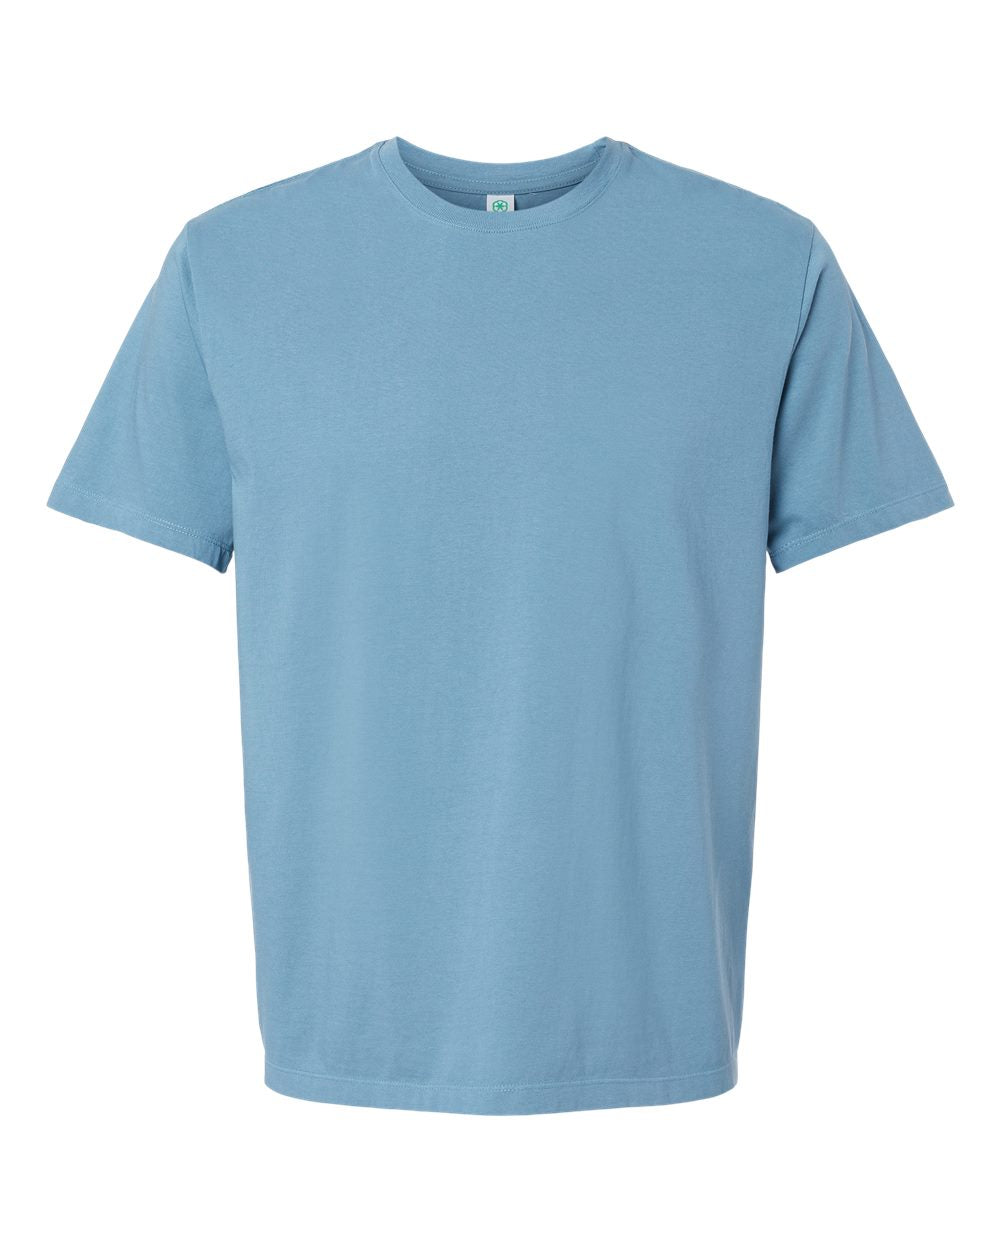 Softshirts® Unisex Organic Cotton T-shirt in slate